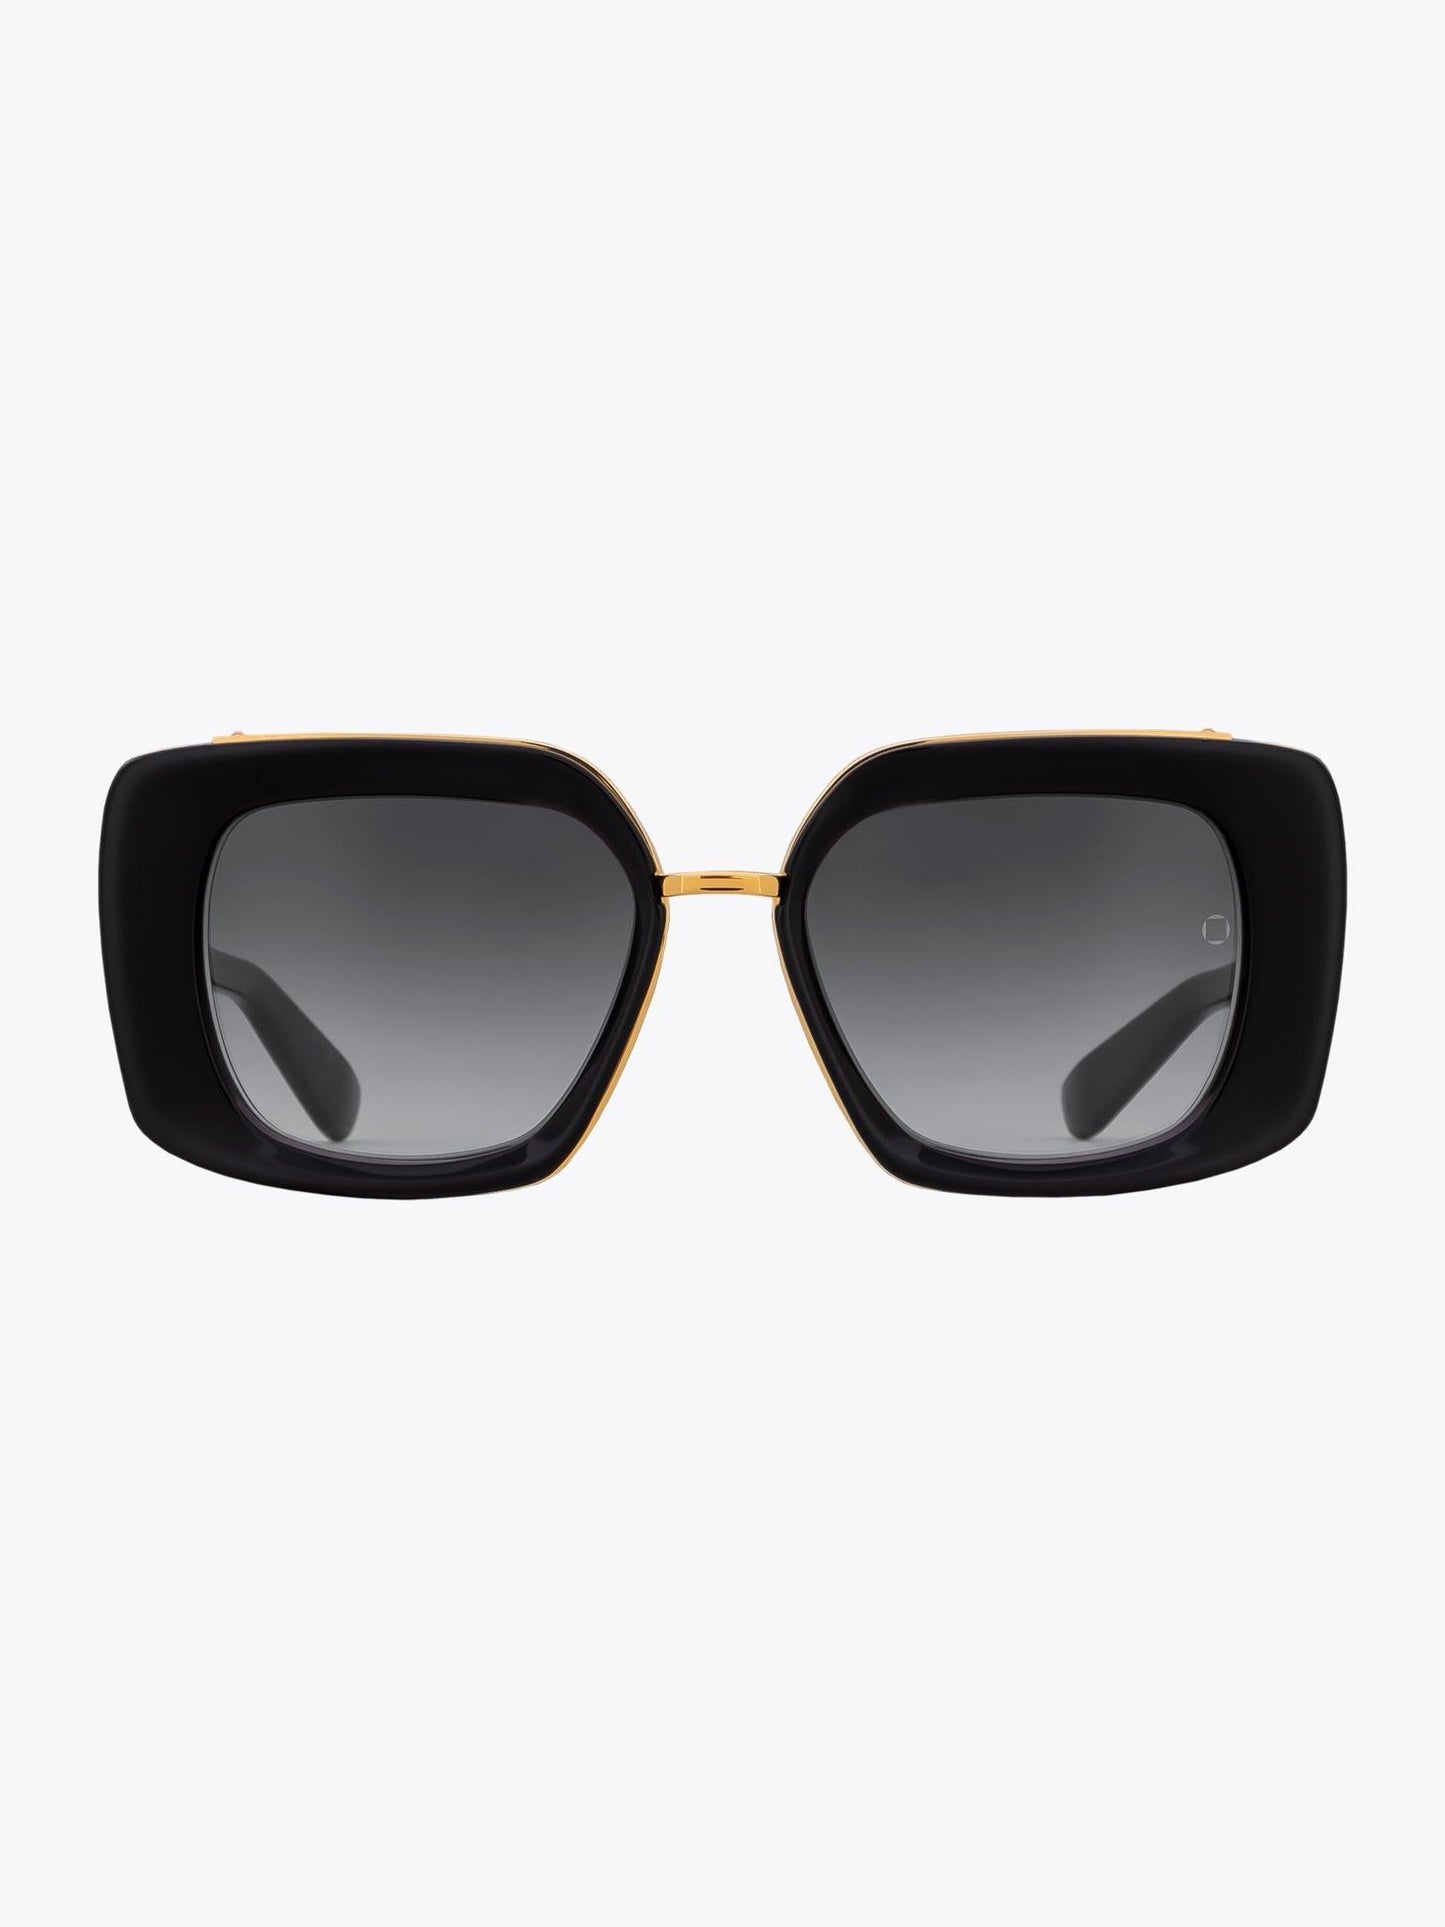 AKONI Virgo Black/Gold Sunglasses - APODEP.com